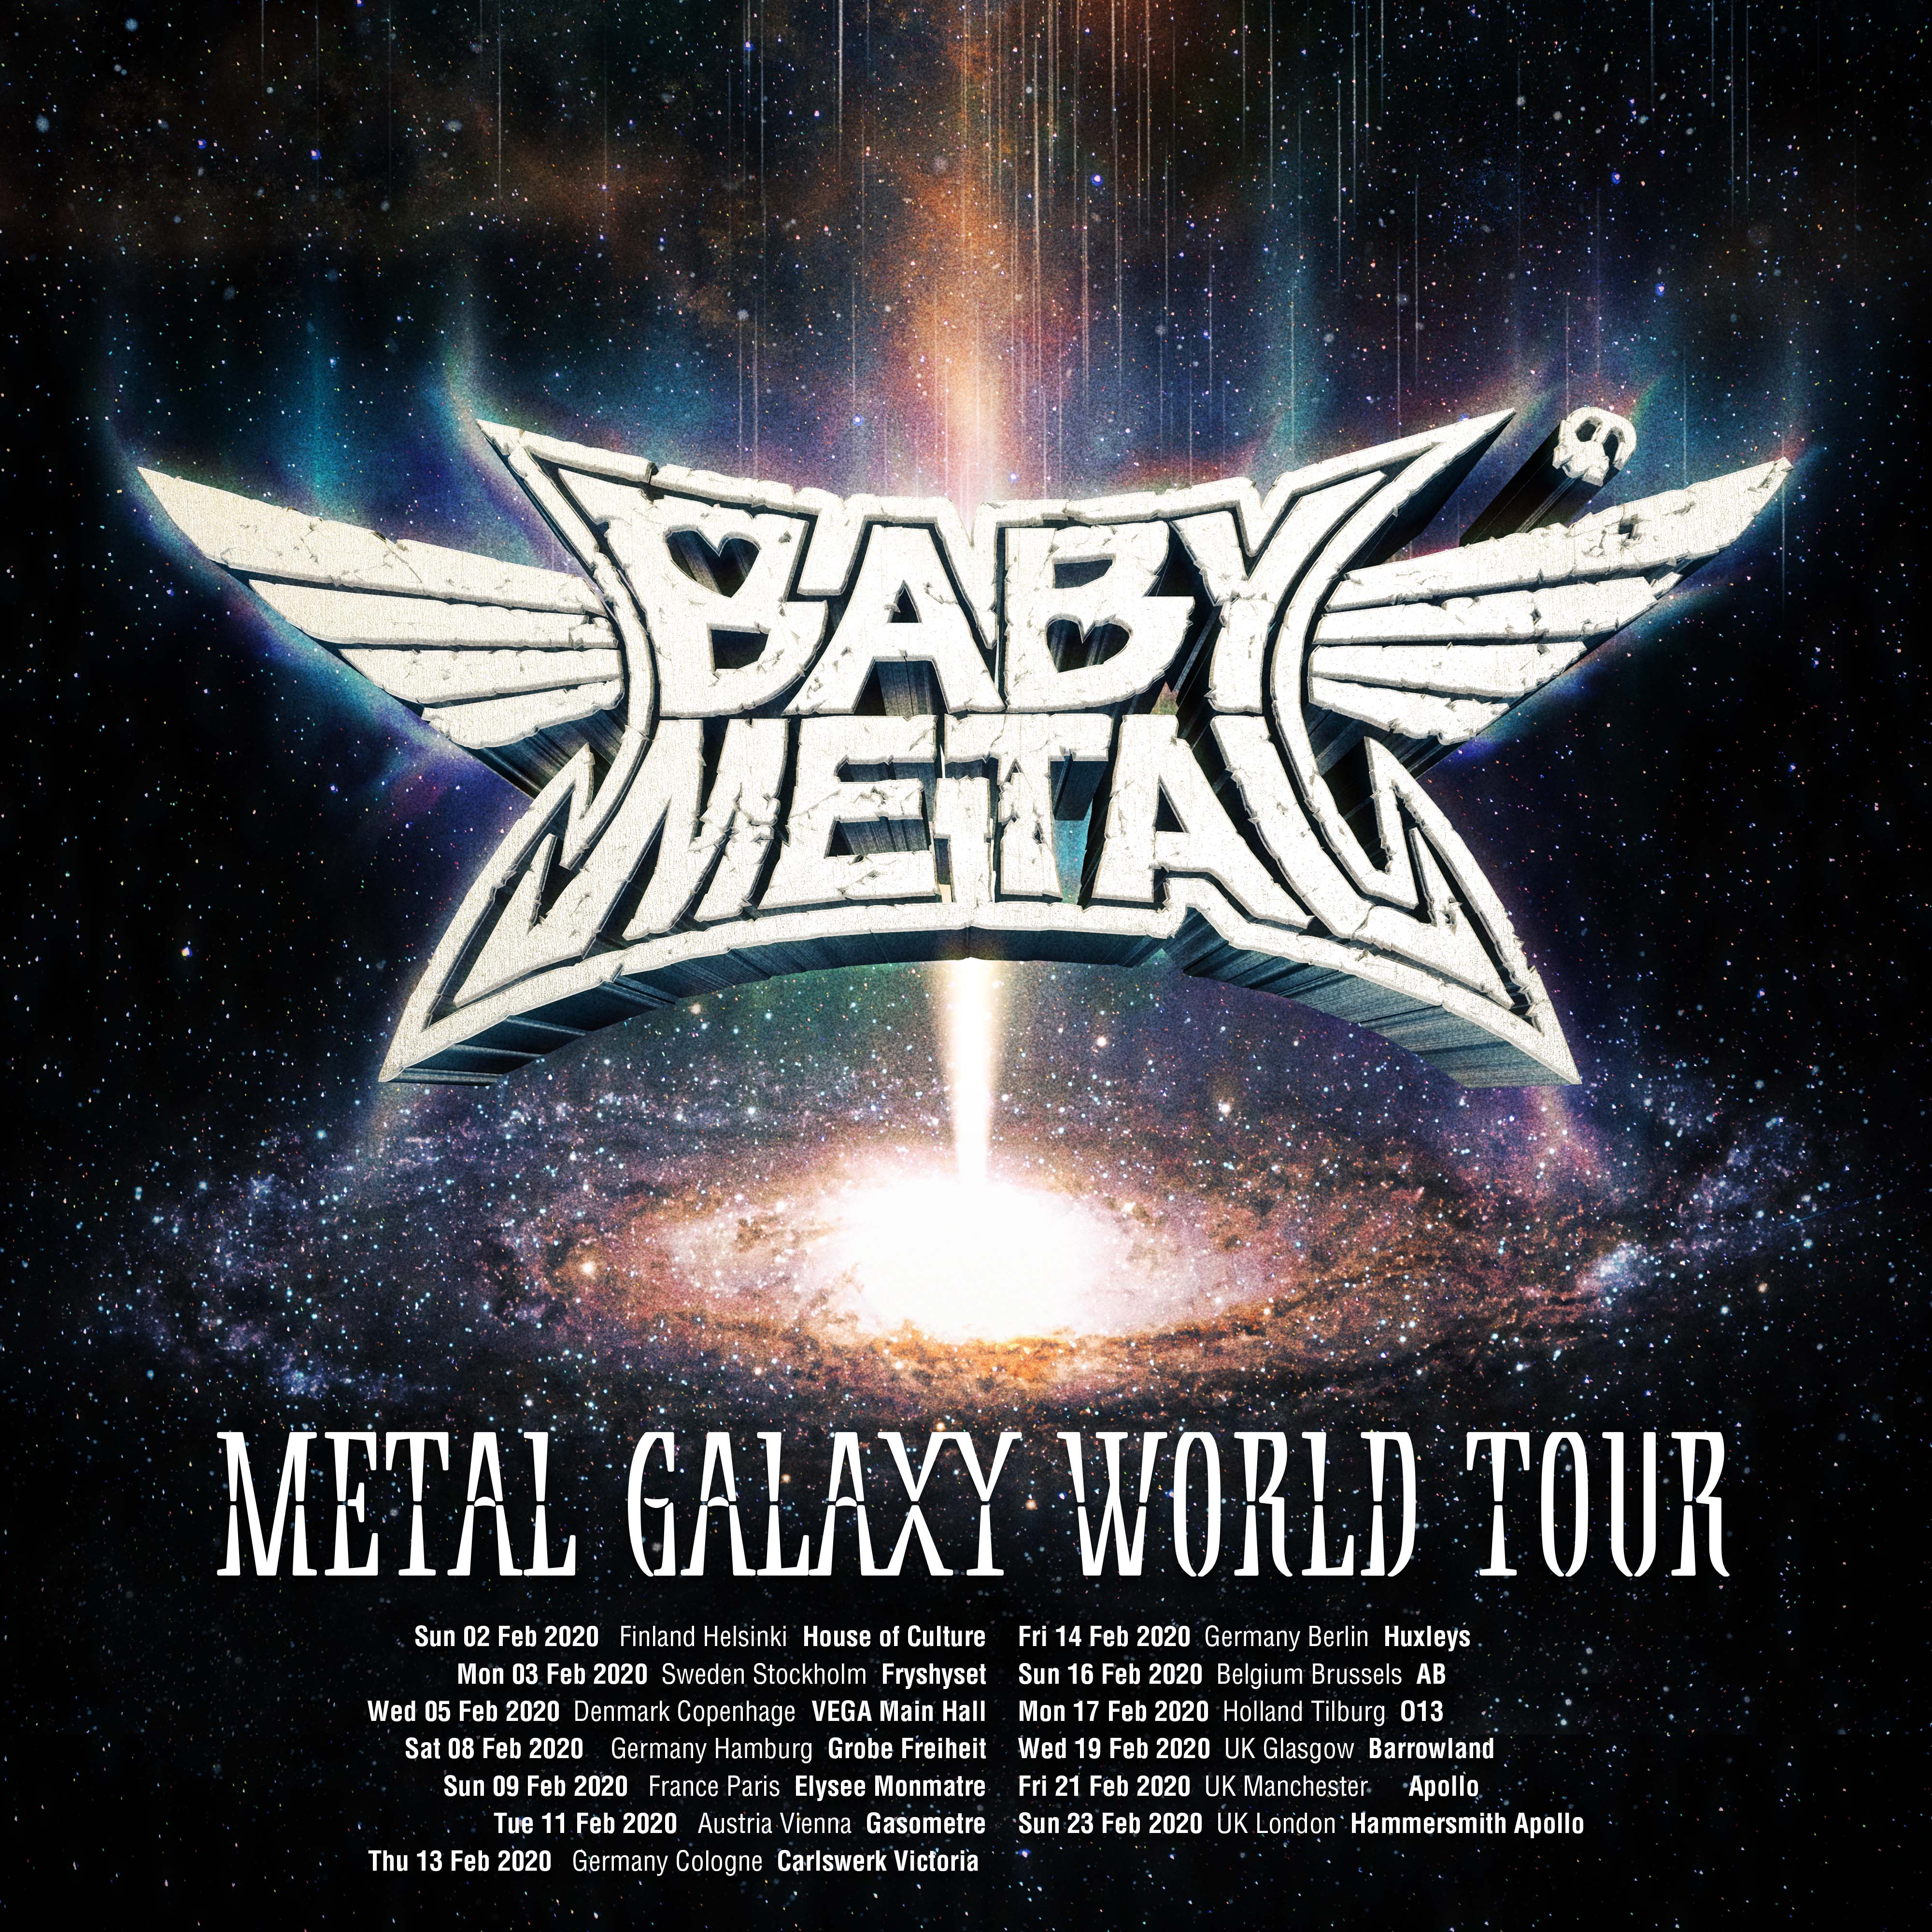 BABYMETAL METAL GALAXY WORLD TOUR